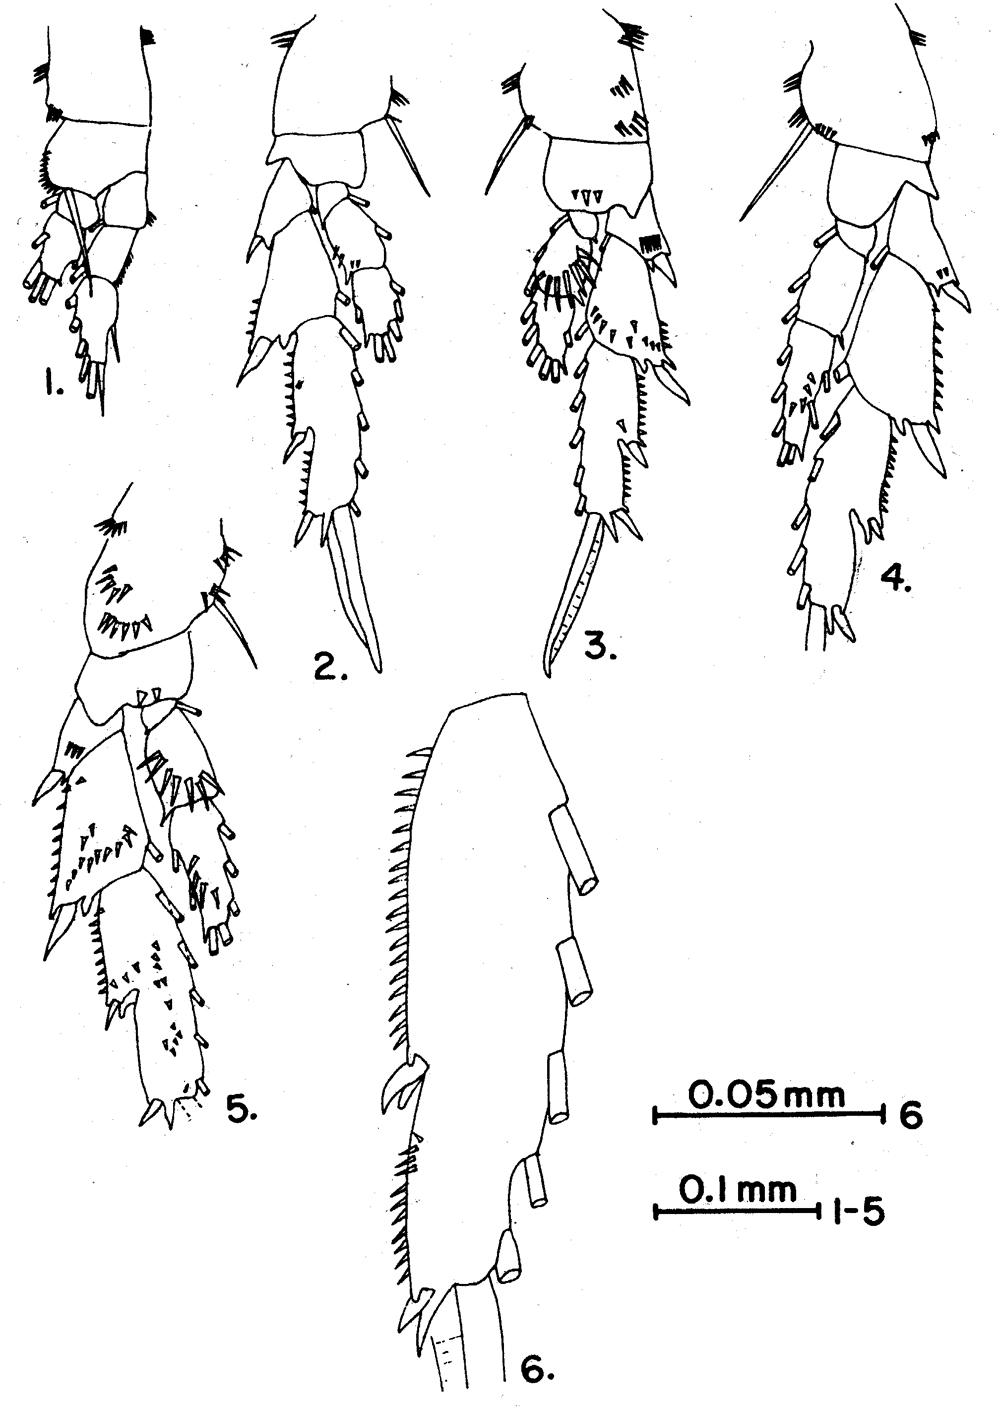 Species Acrocalanus andersoni - Plate 8 of morphological figures